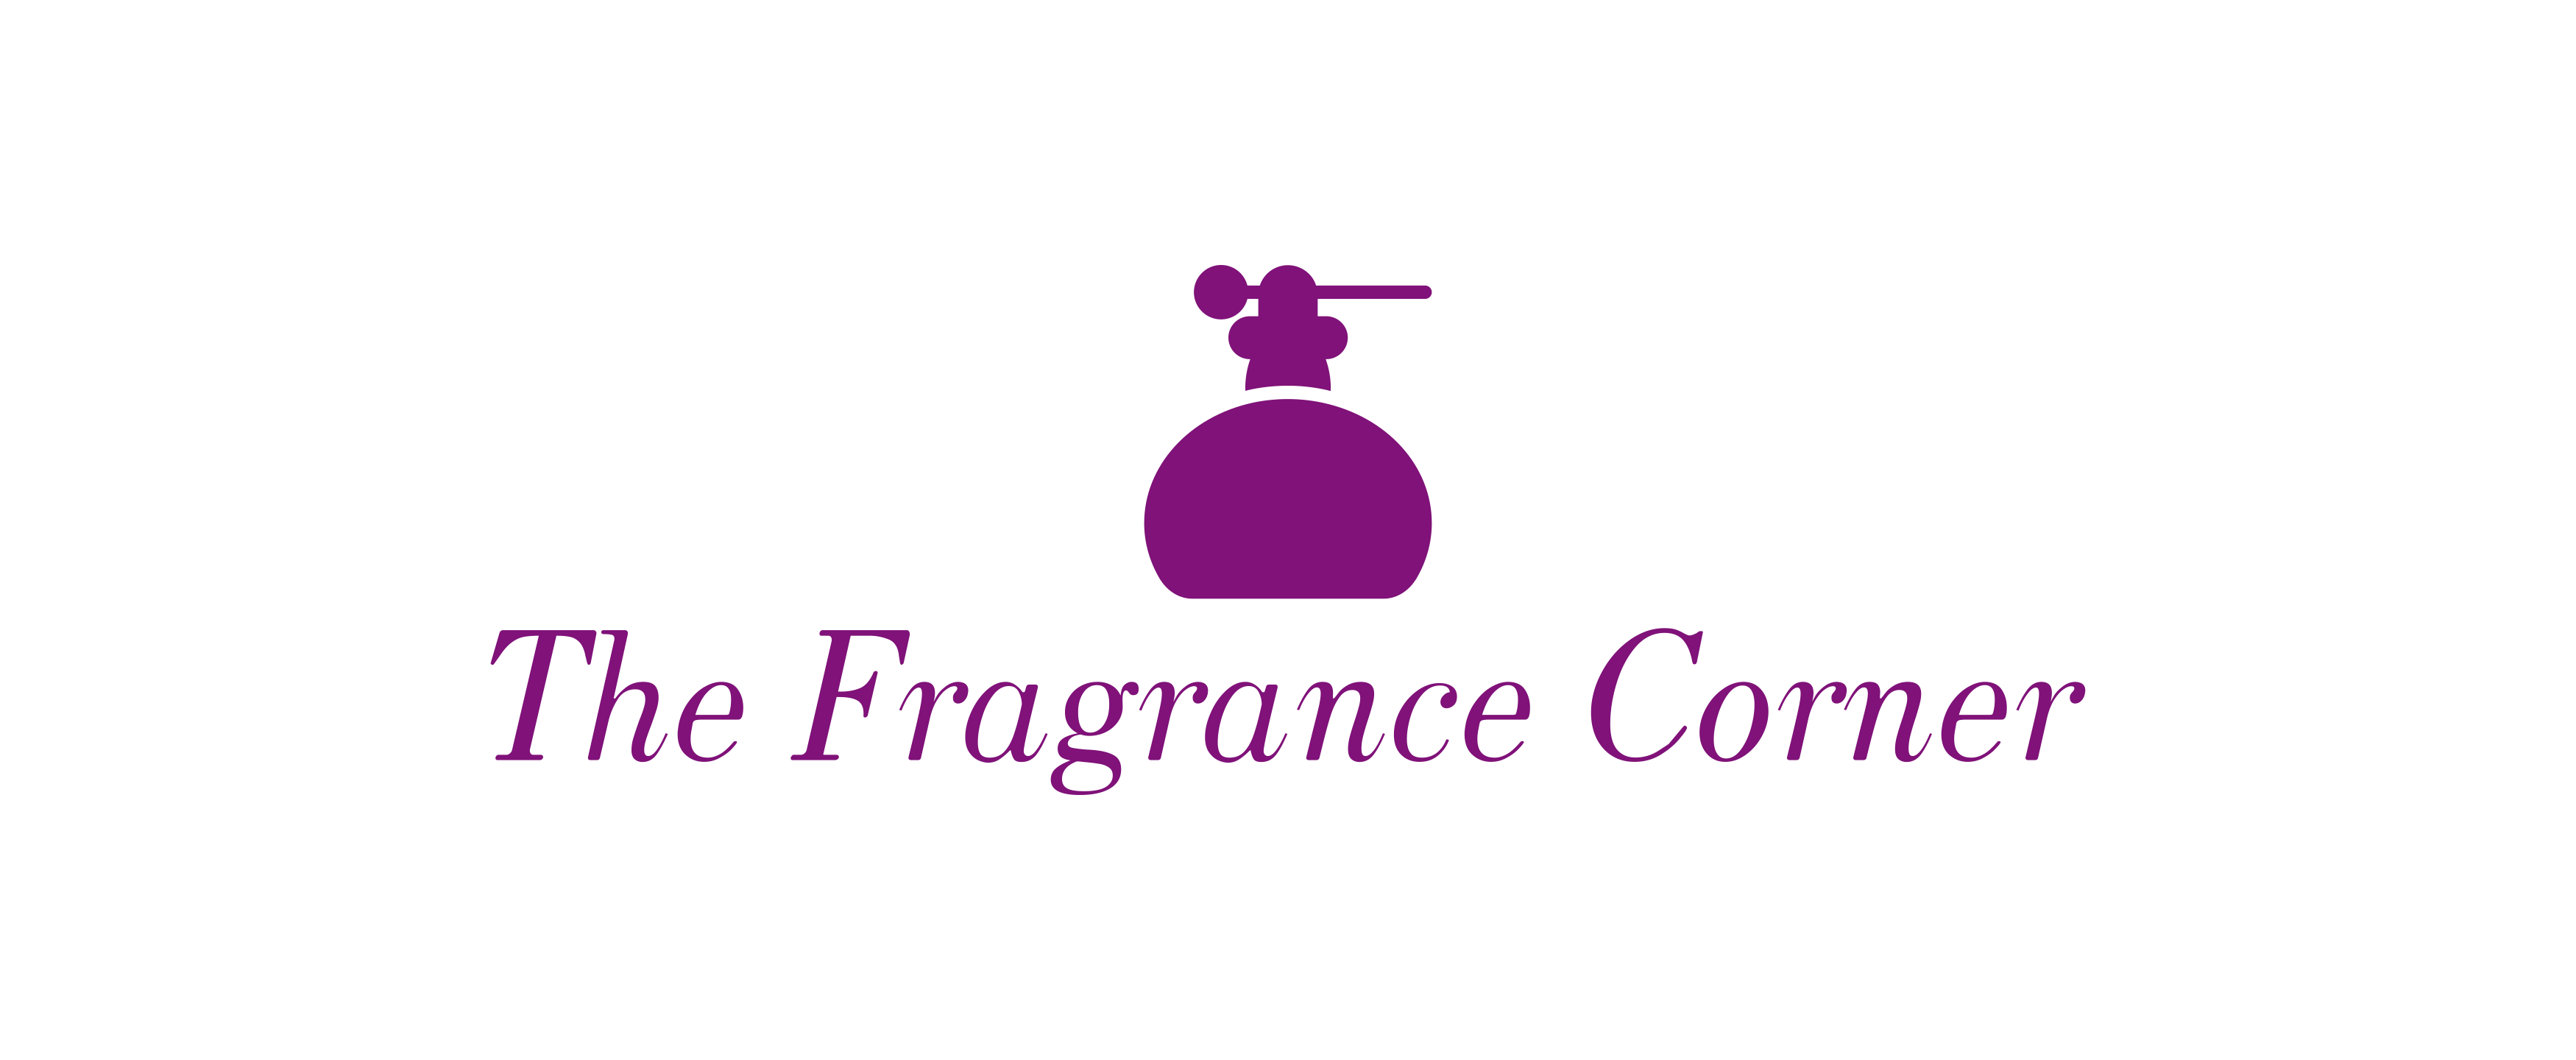 The Fragrance Corner